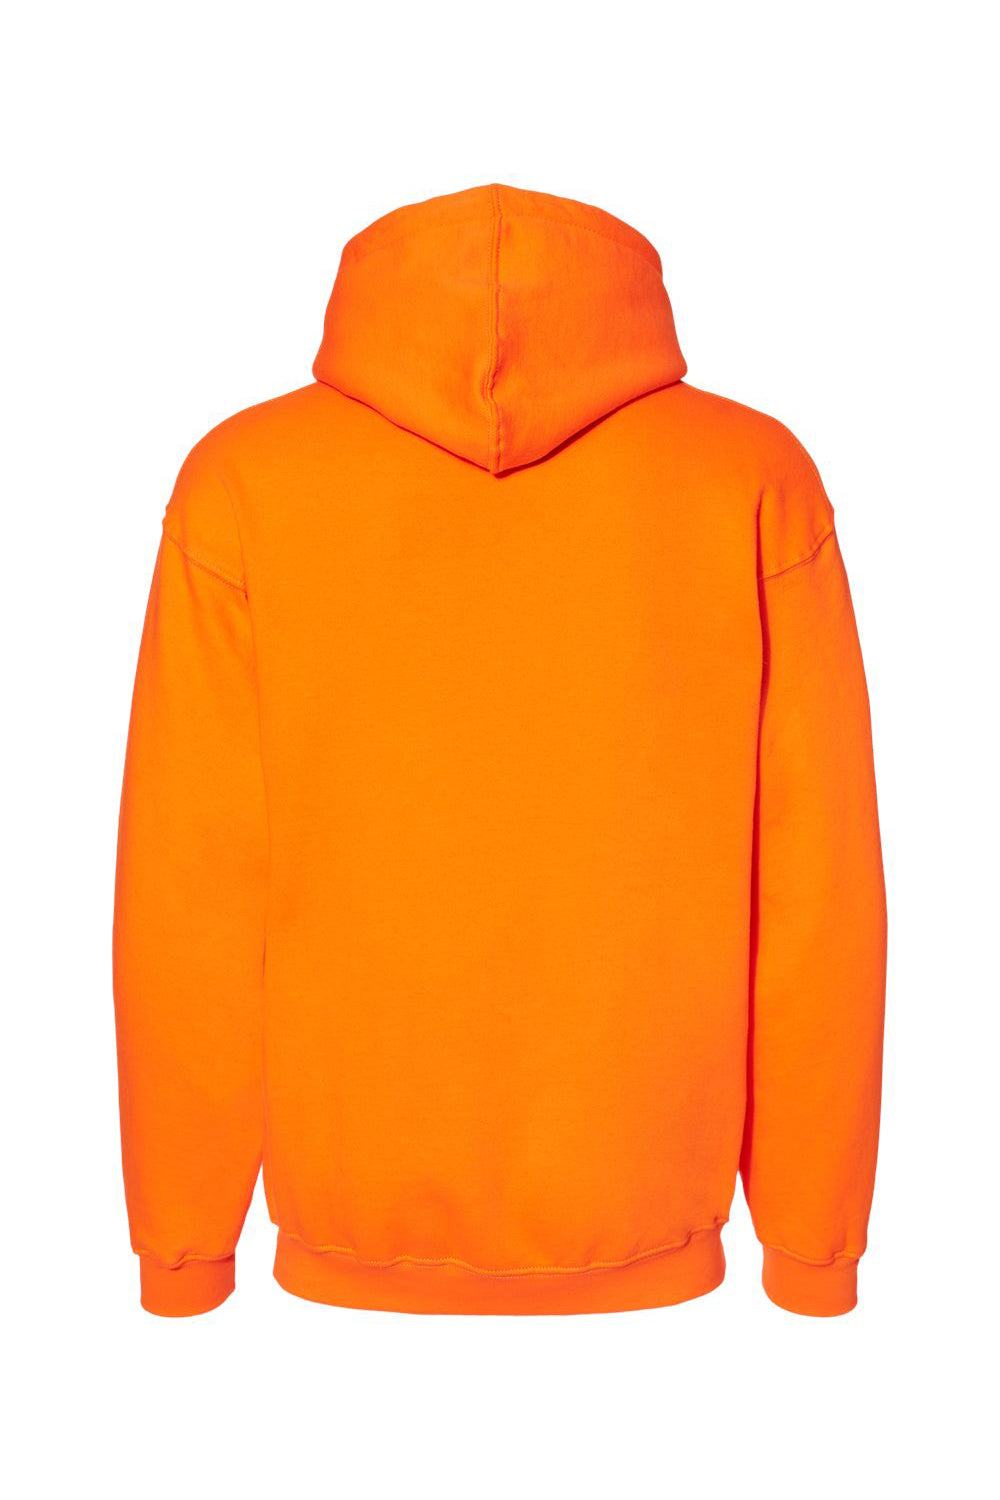 Bayside BA960 Mens USA Made Hooded Sweatshirt Hoodie Bright Orange Flat Back